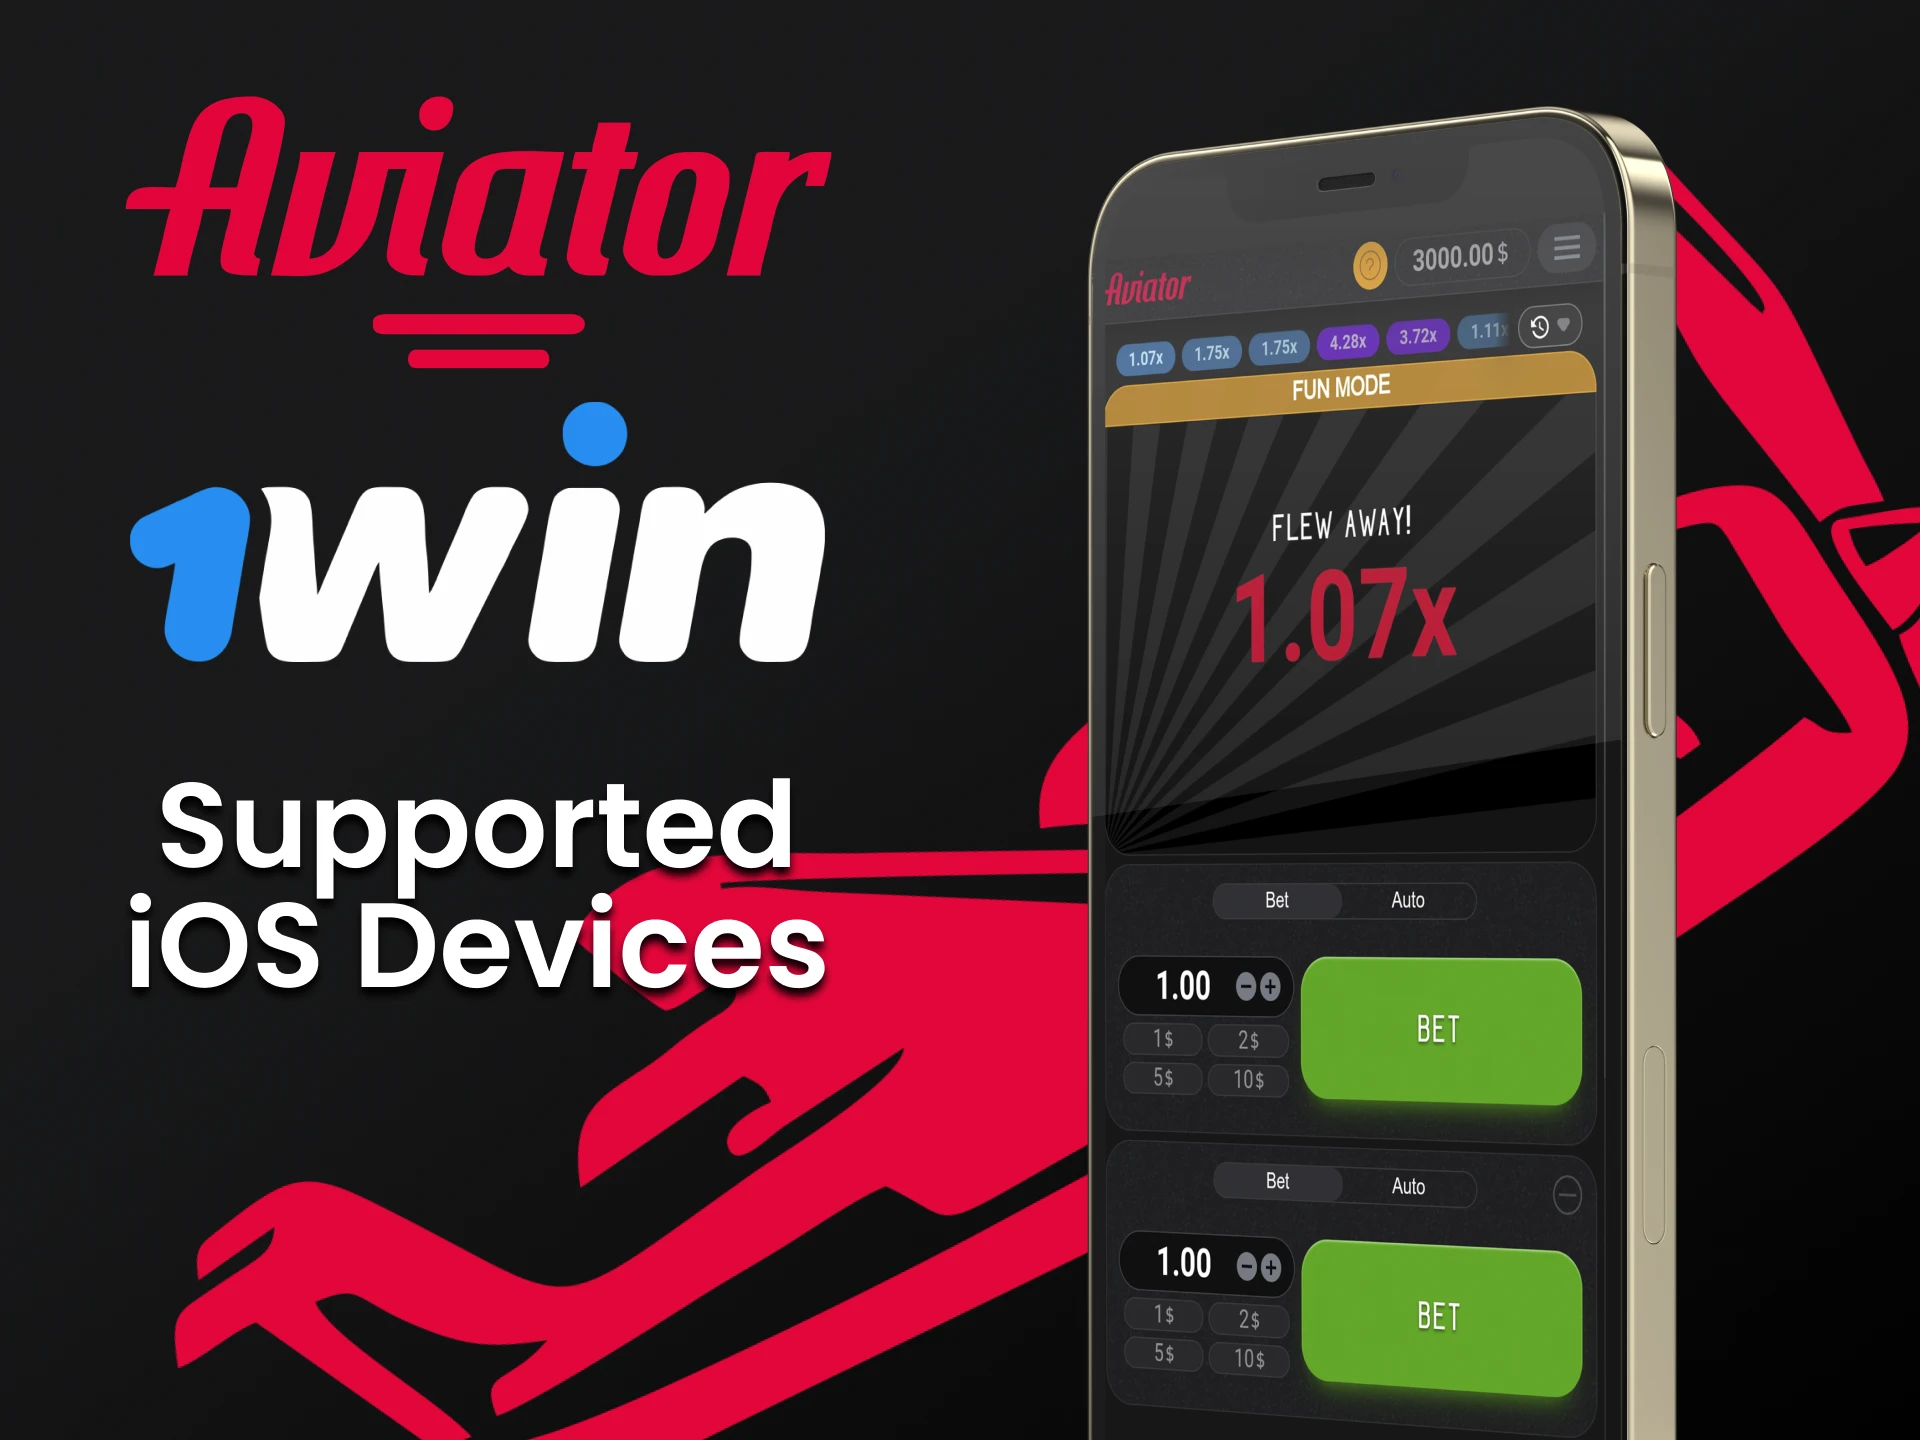 Play Aviator through the 1win app on your ios device.